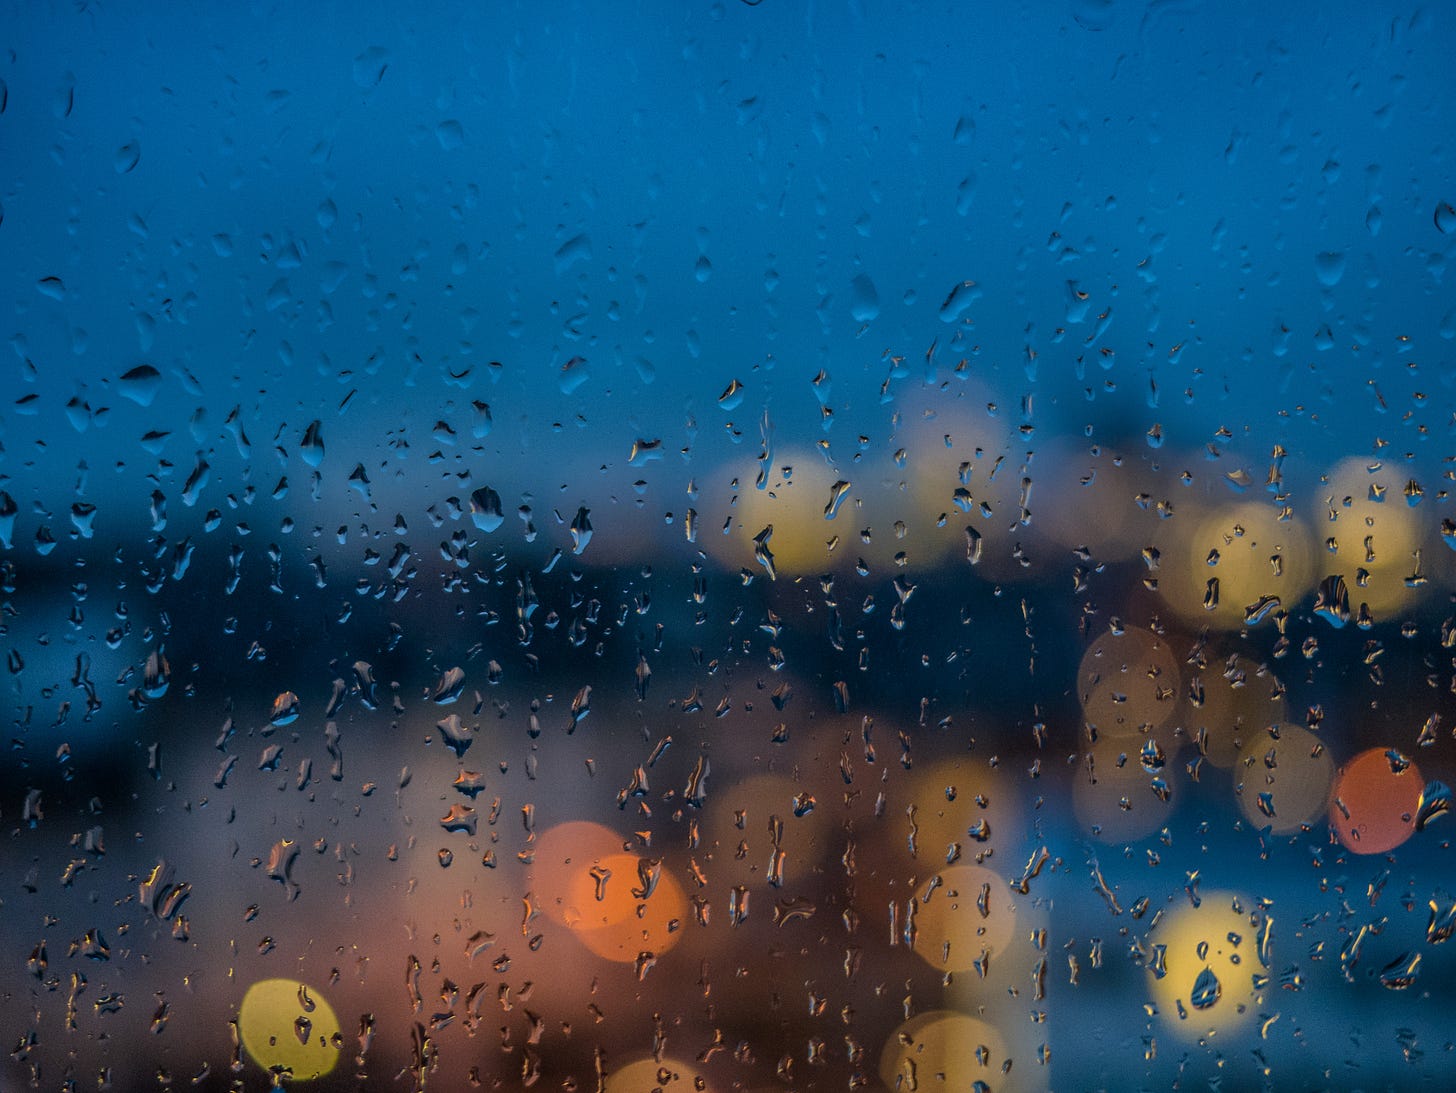 File:Rain on window pane P1320871.jpg - Wikimedia Commons